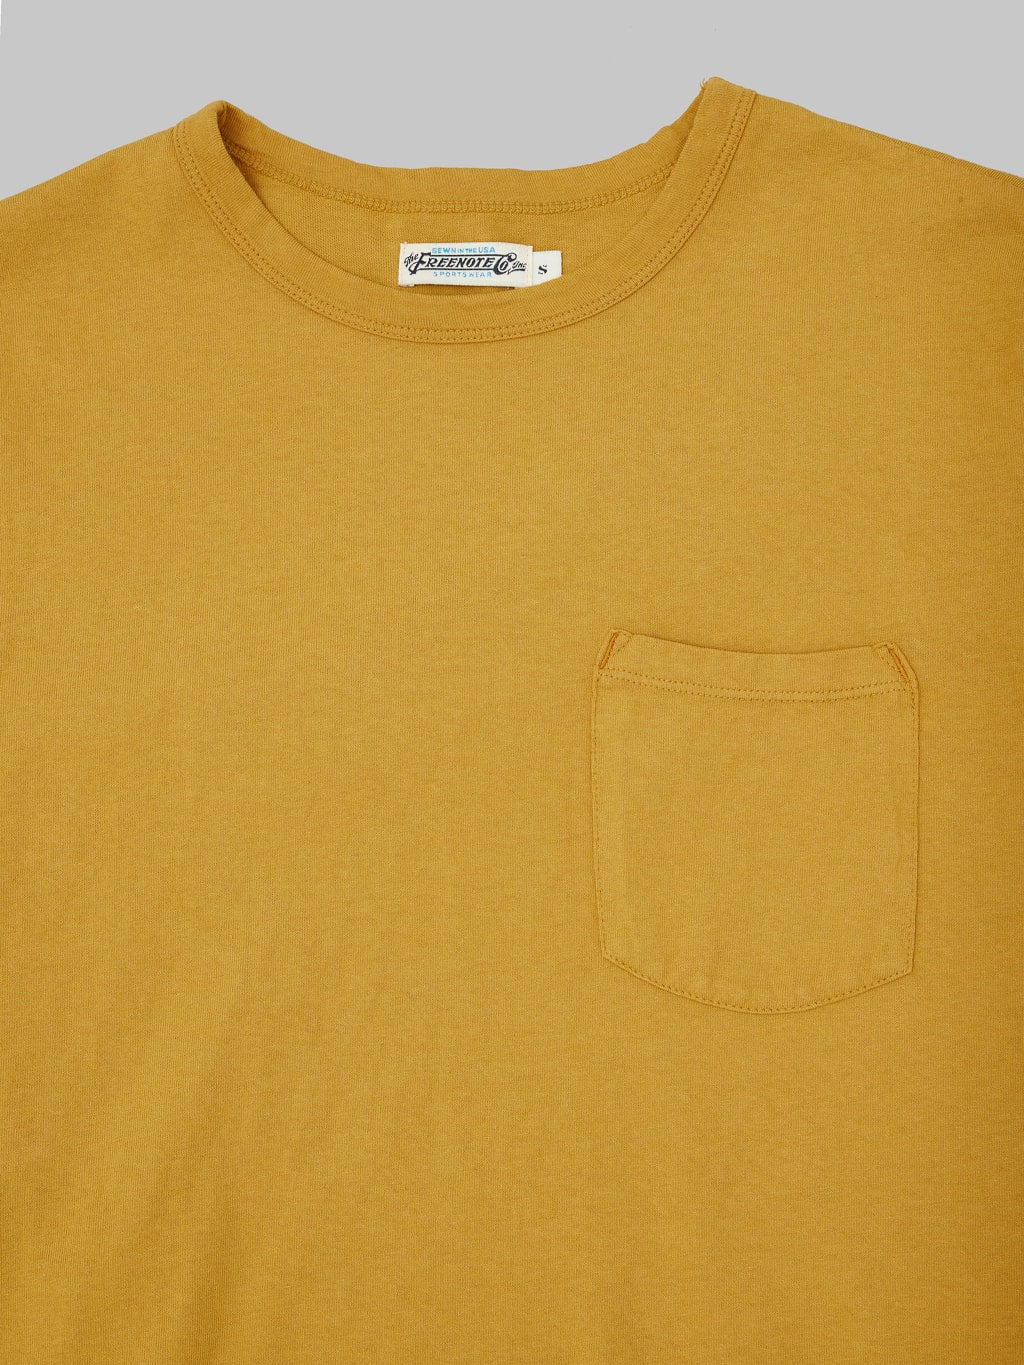 freenote cloth 9 ounce pocket t shirt mustard heavyweight 100 cotton